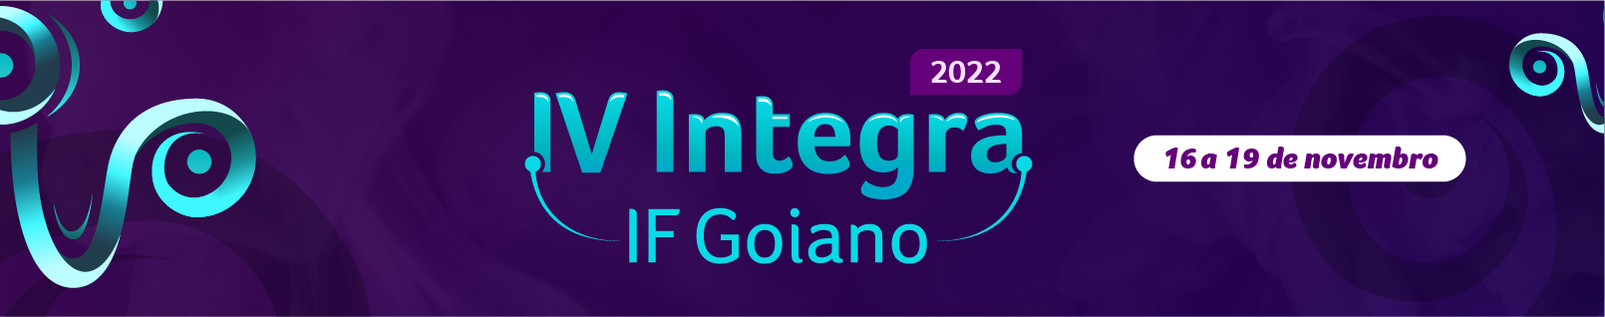 Banner IV Integra IF Goiano 2022